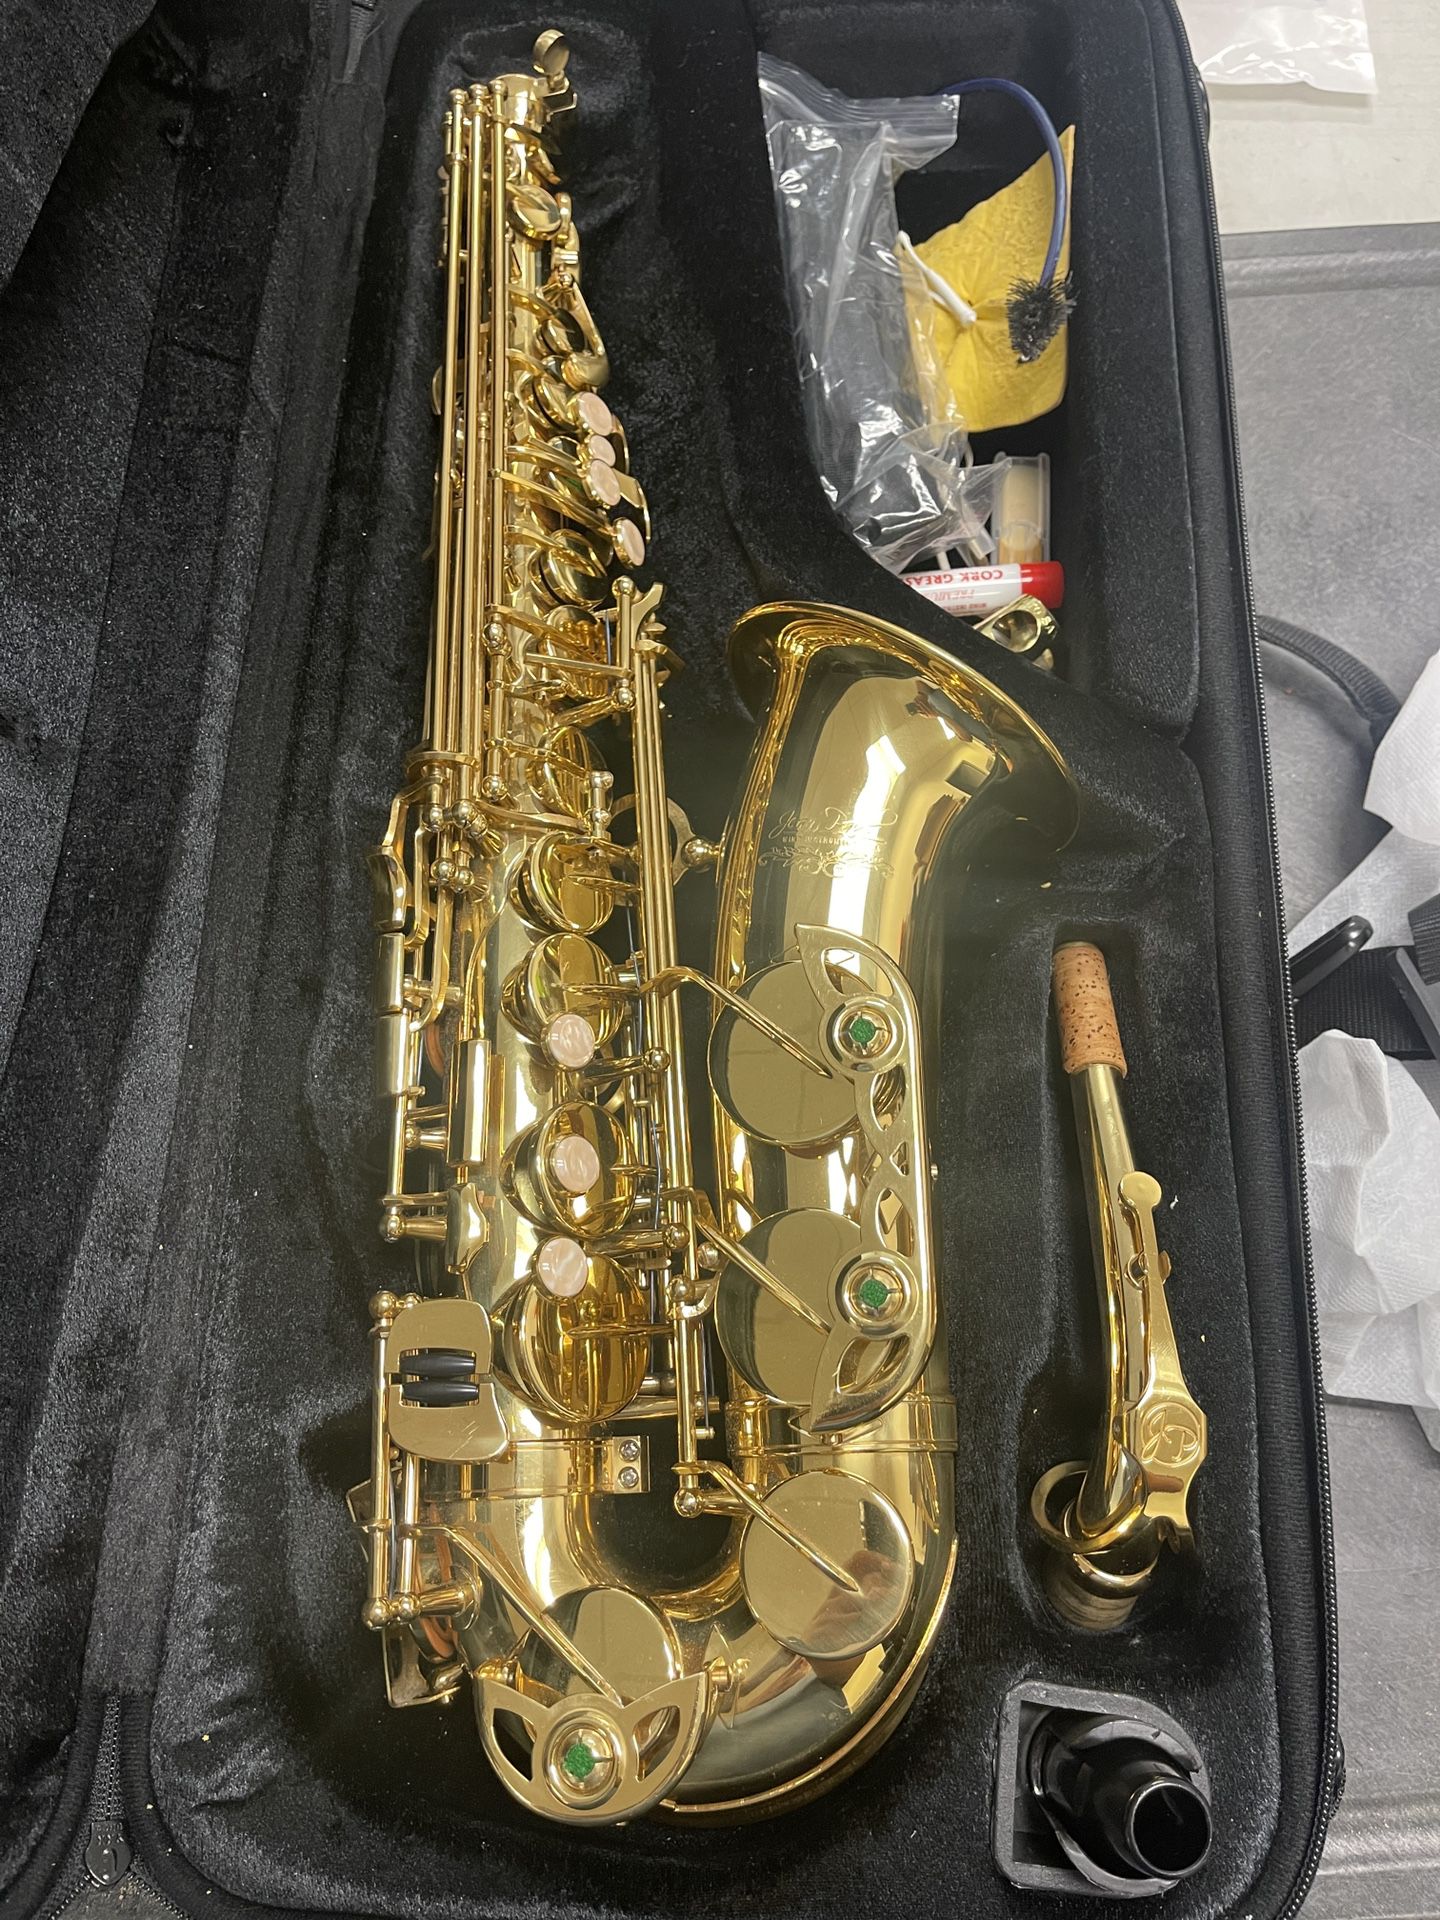 Jean Paul Alto Saxophone, Case & Maintenance Kit